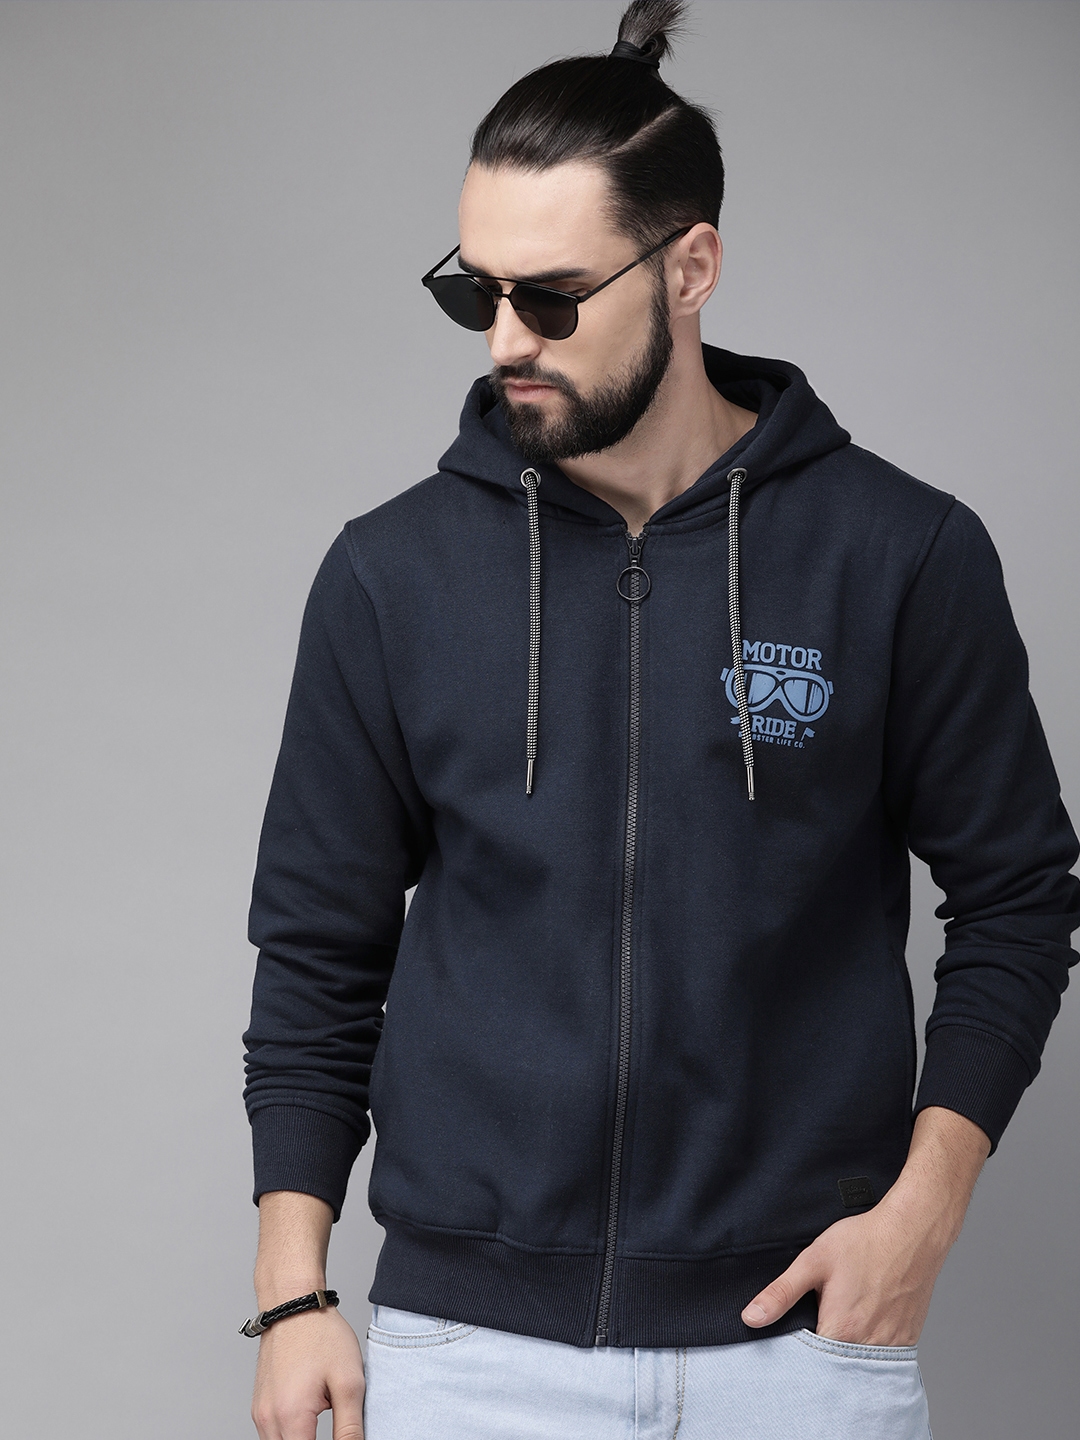 Buy The Roadster Lifestyle Co Men Navy Blue Solid Hooded Sweatshirt ...